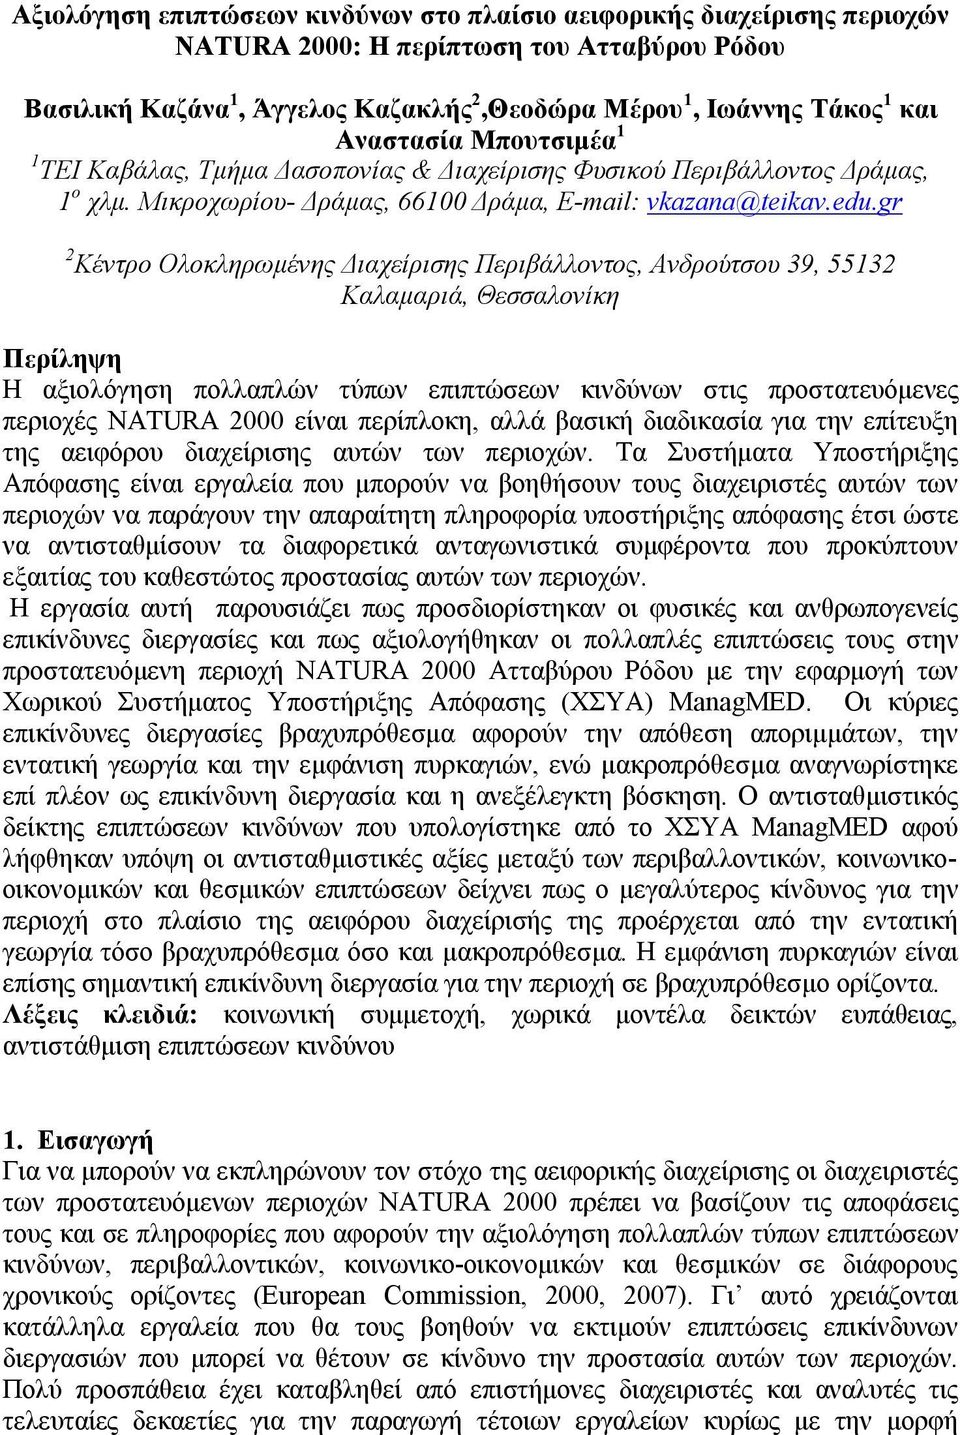 gr 2 Κέντρο Ολοκληρωμένης Διαχείρισης Περιβάλλοντος, Ανδρούτσου 39, 55132 Καλαμαριά, Θεσσαλονίκη Περίληψη Η αξιολόγηση πολλαπλών τύπων επιπτώσεων κινδύνων στις προστατευόμενες περιοχές NATURA 2000